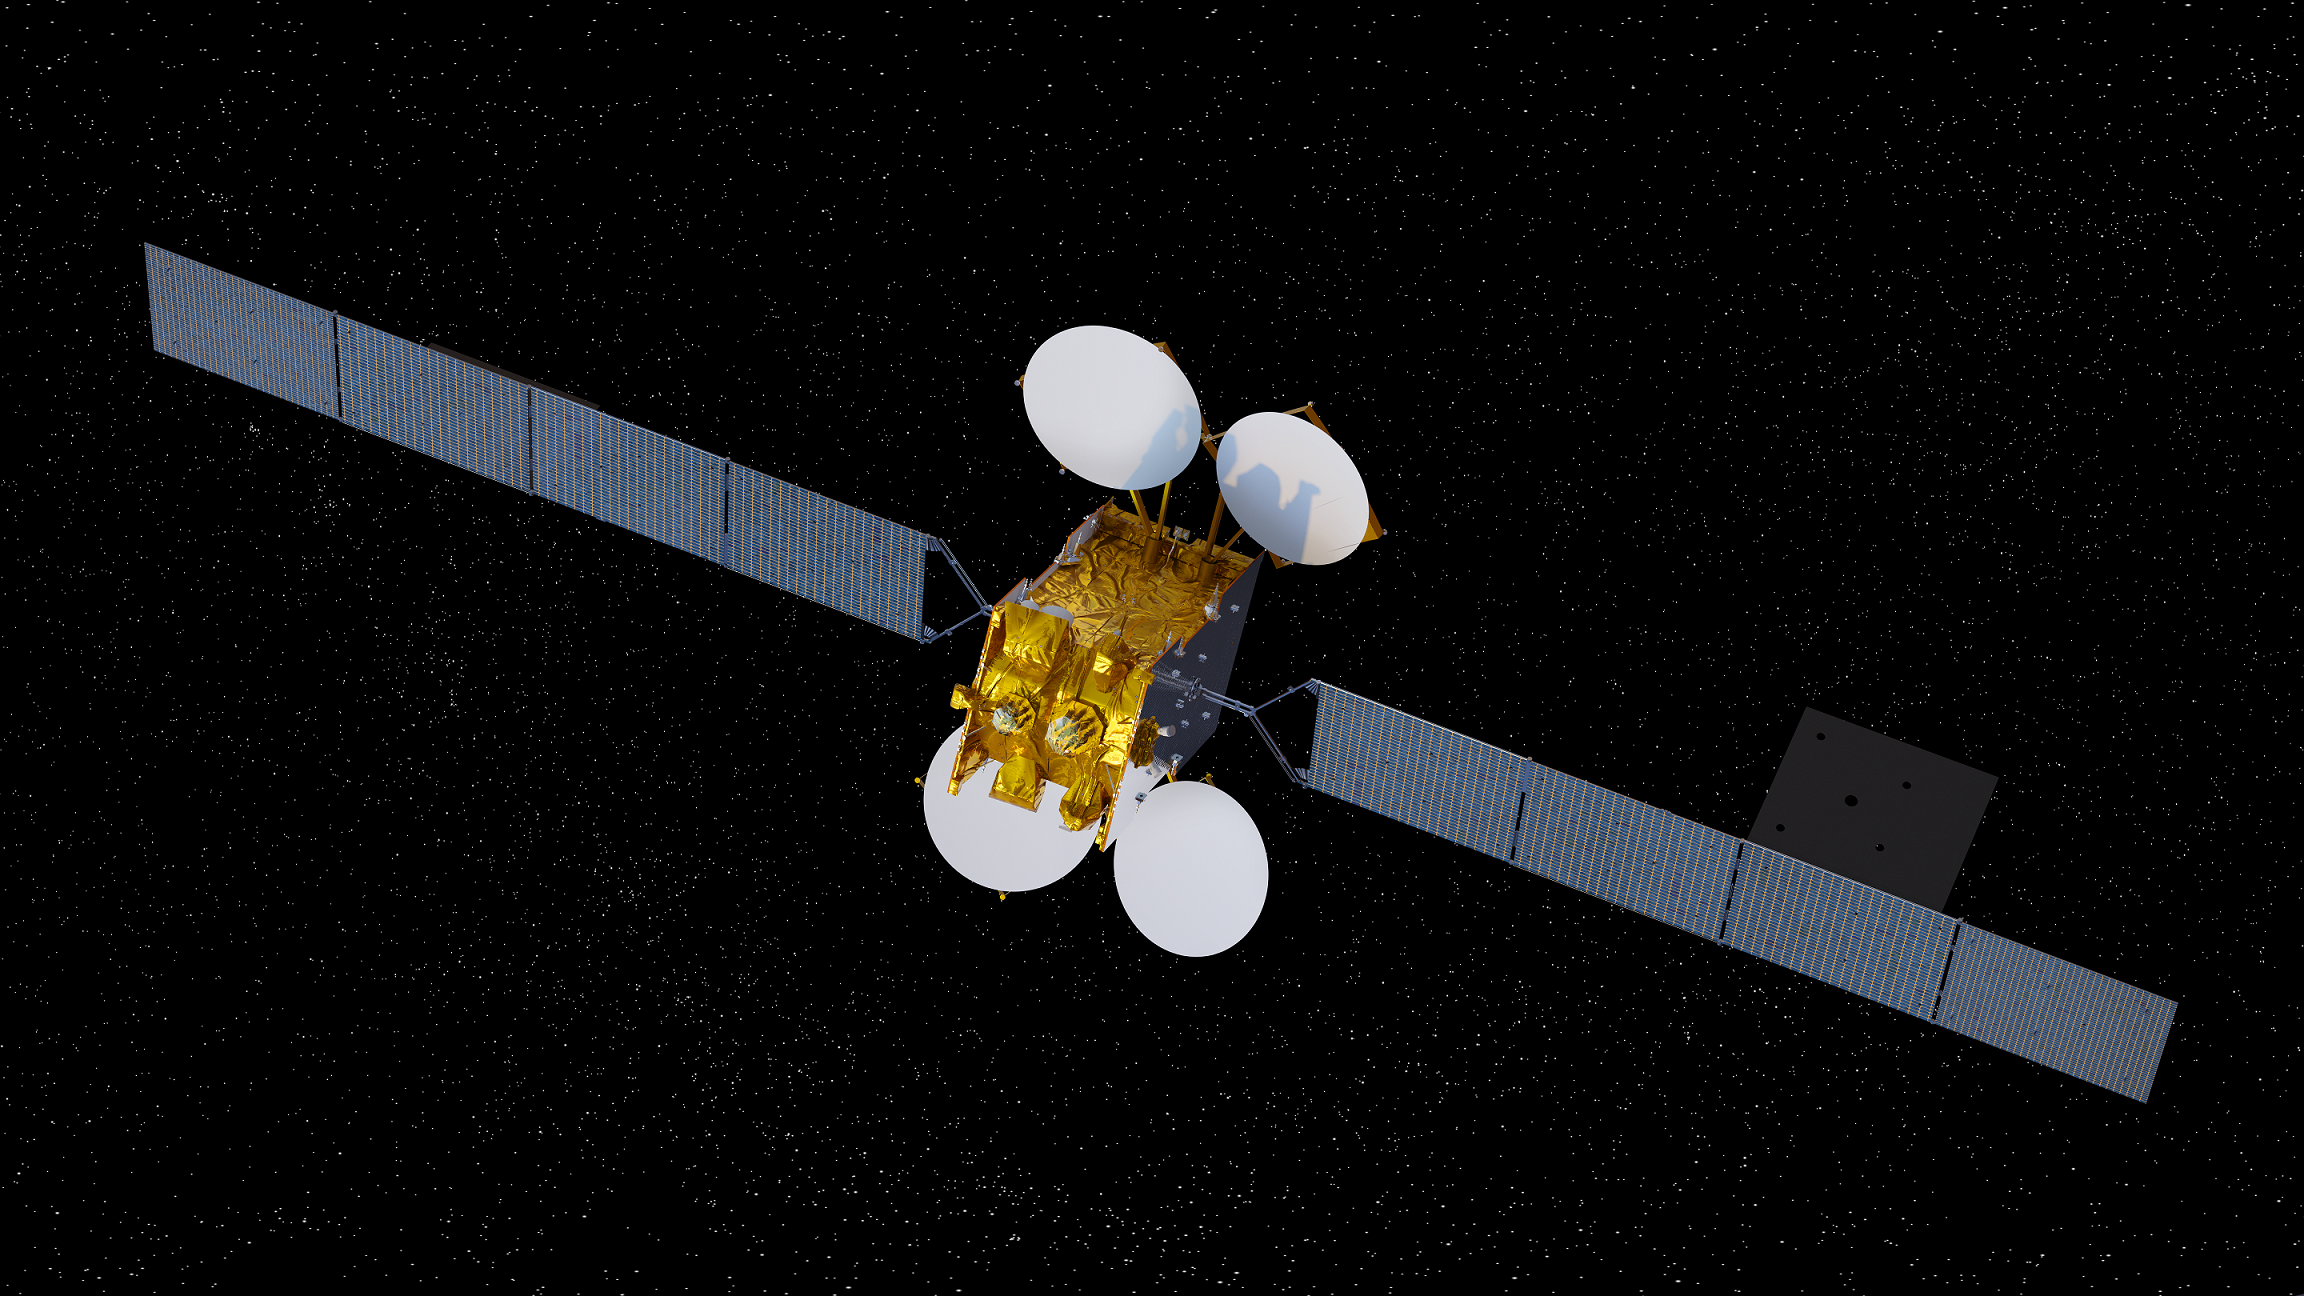 New MEASAT-3d satellite will further expand Maxis’ Rangkaian Menyeluruh